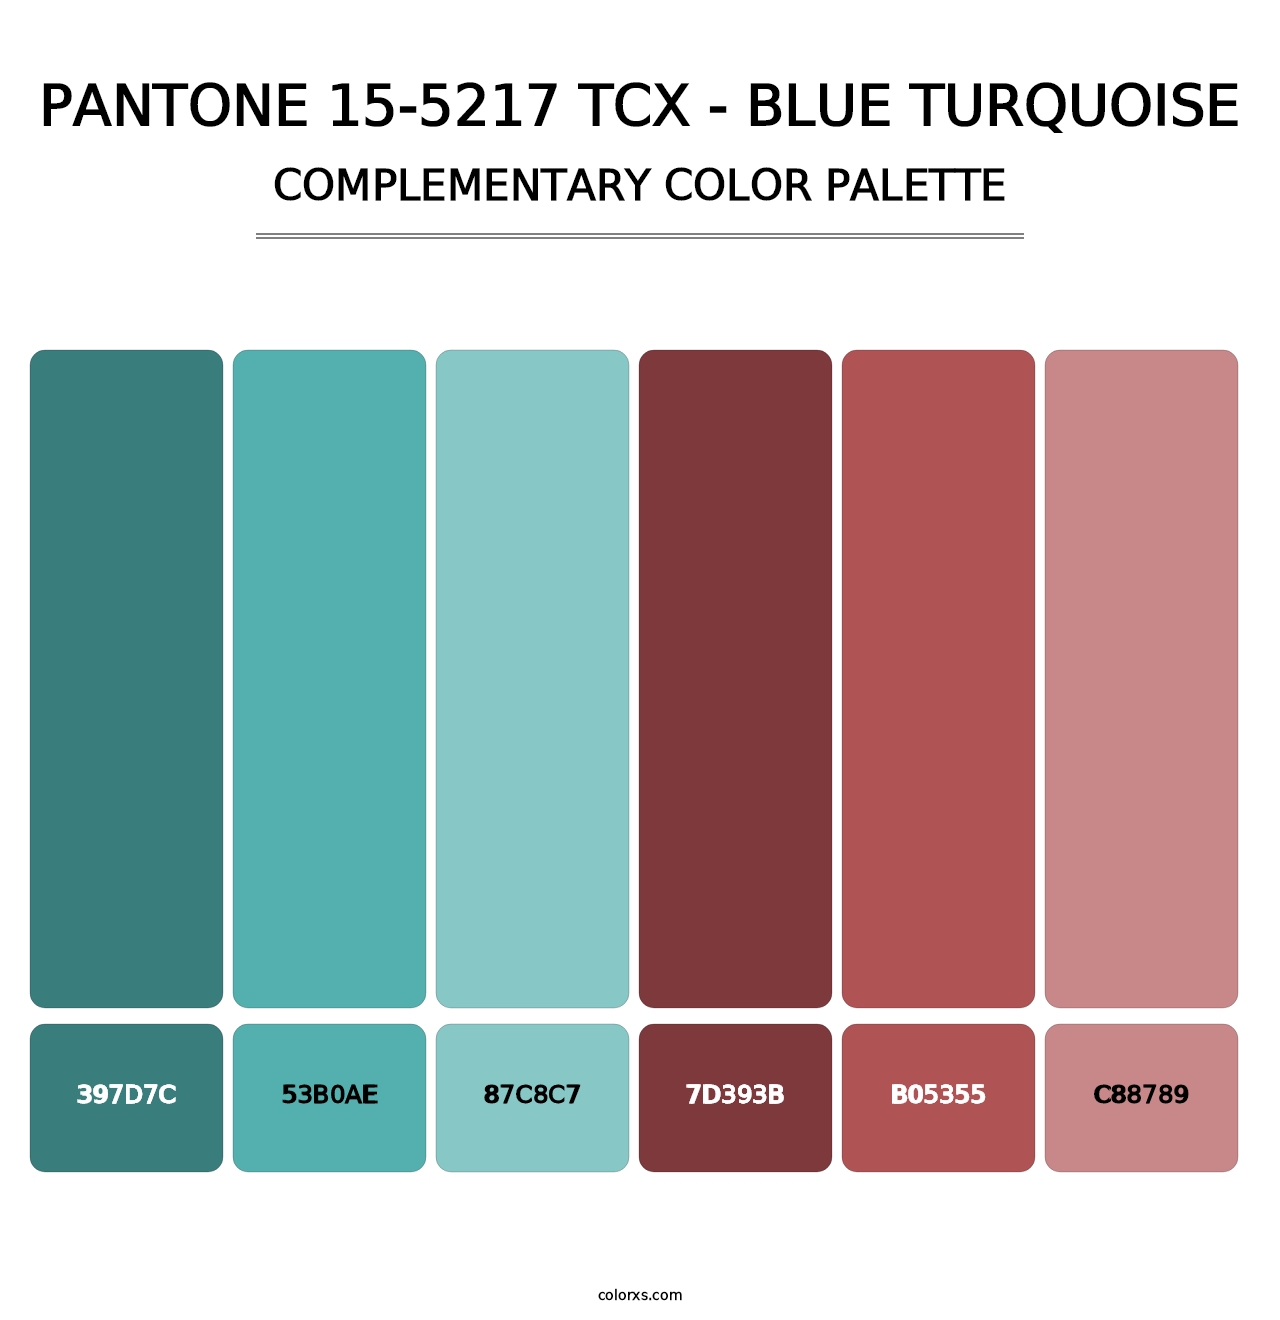 PANTONE 15-5217 TCX - Blue Turquoise - Complementary Color Palette